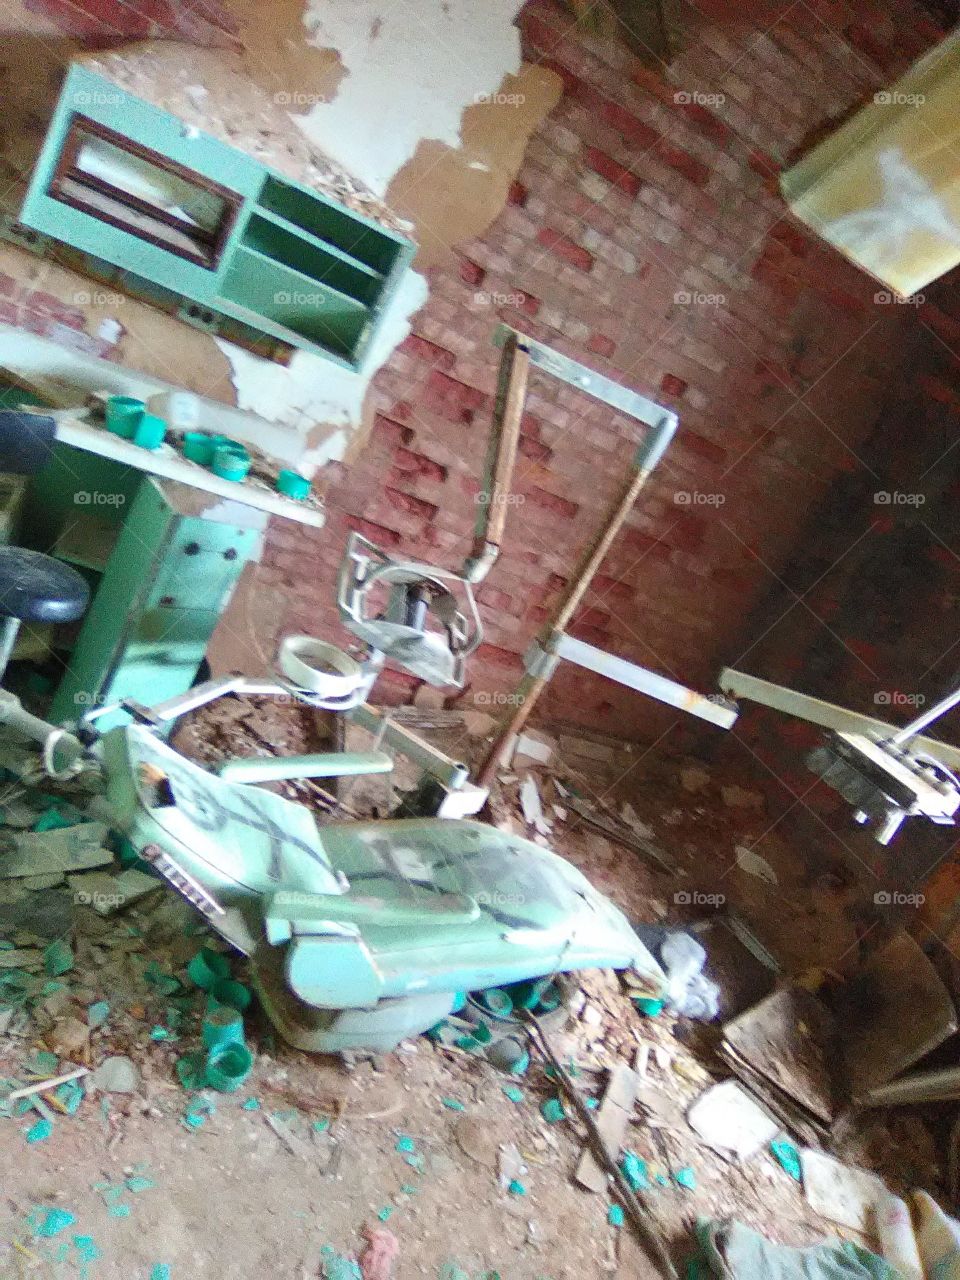 Dentist chair inside asylum